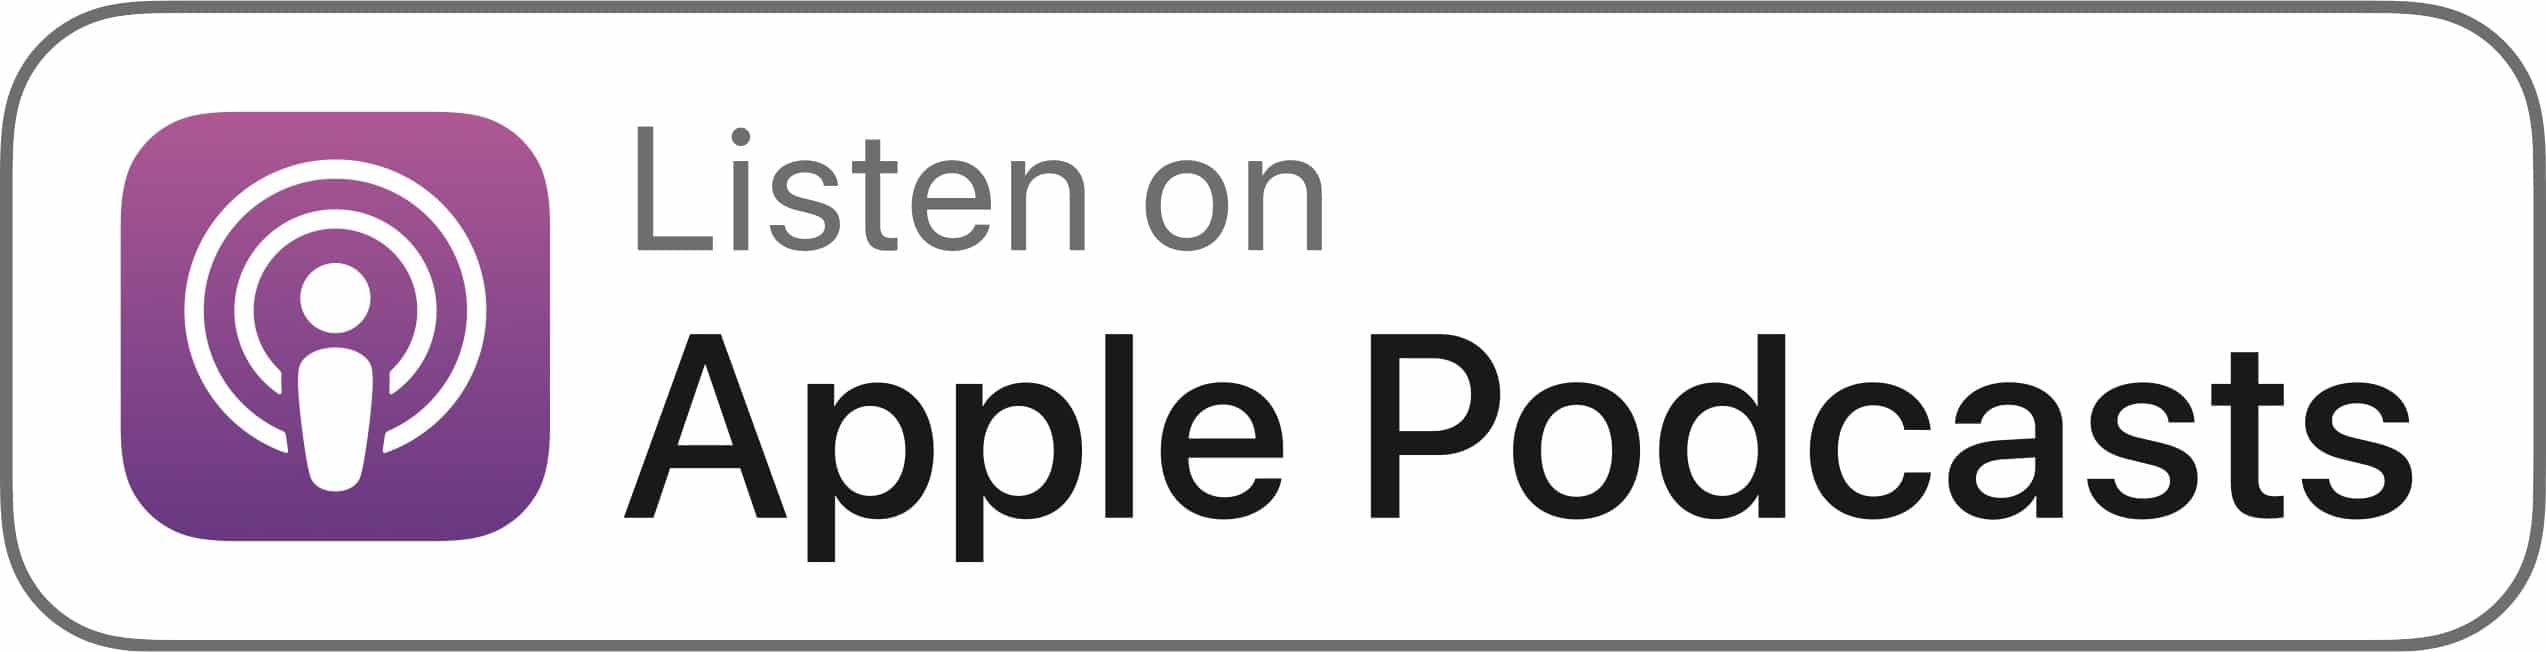 Listen-on-Apple-Podcasts-badgelrg - HRD